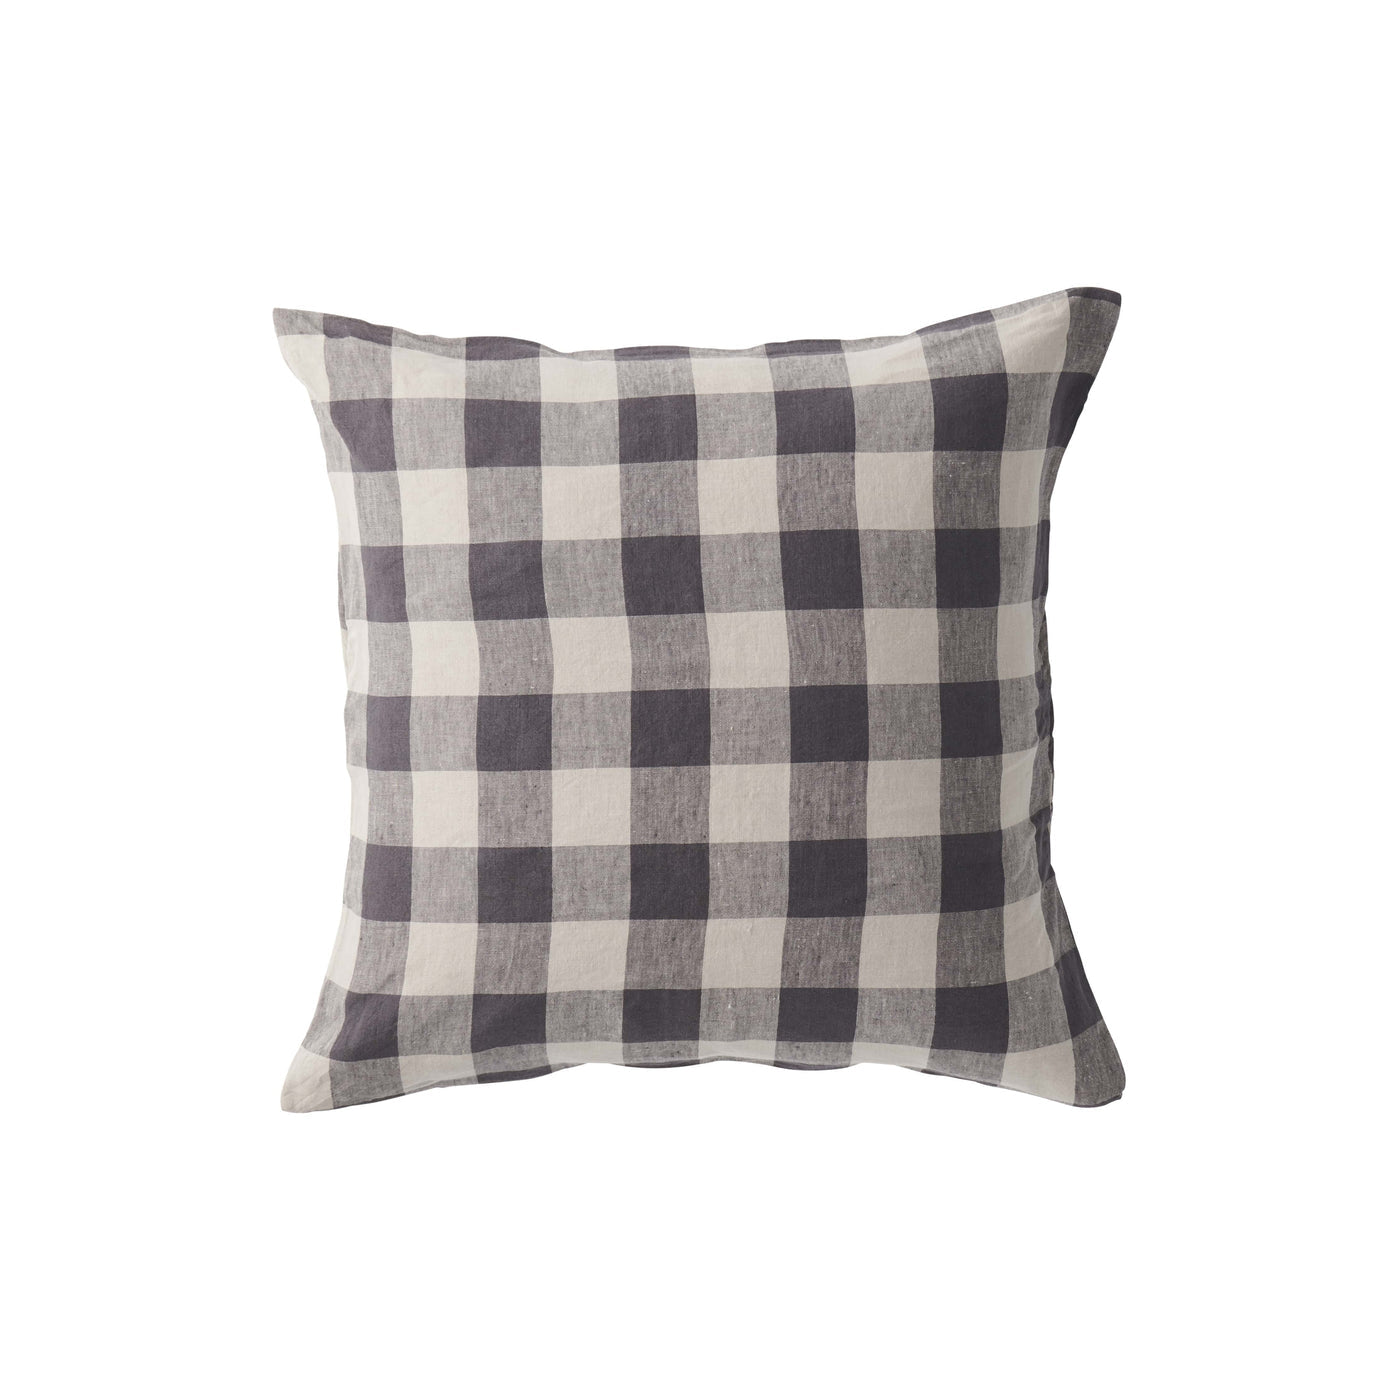 'Liquorice' Gingham Linen Cushion Cover